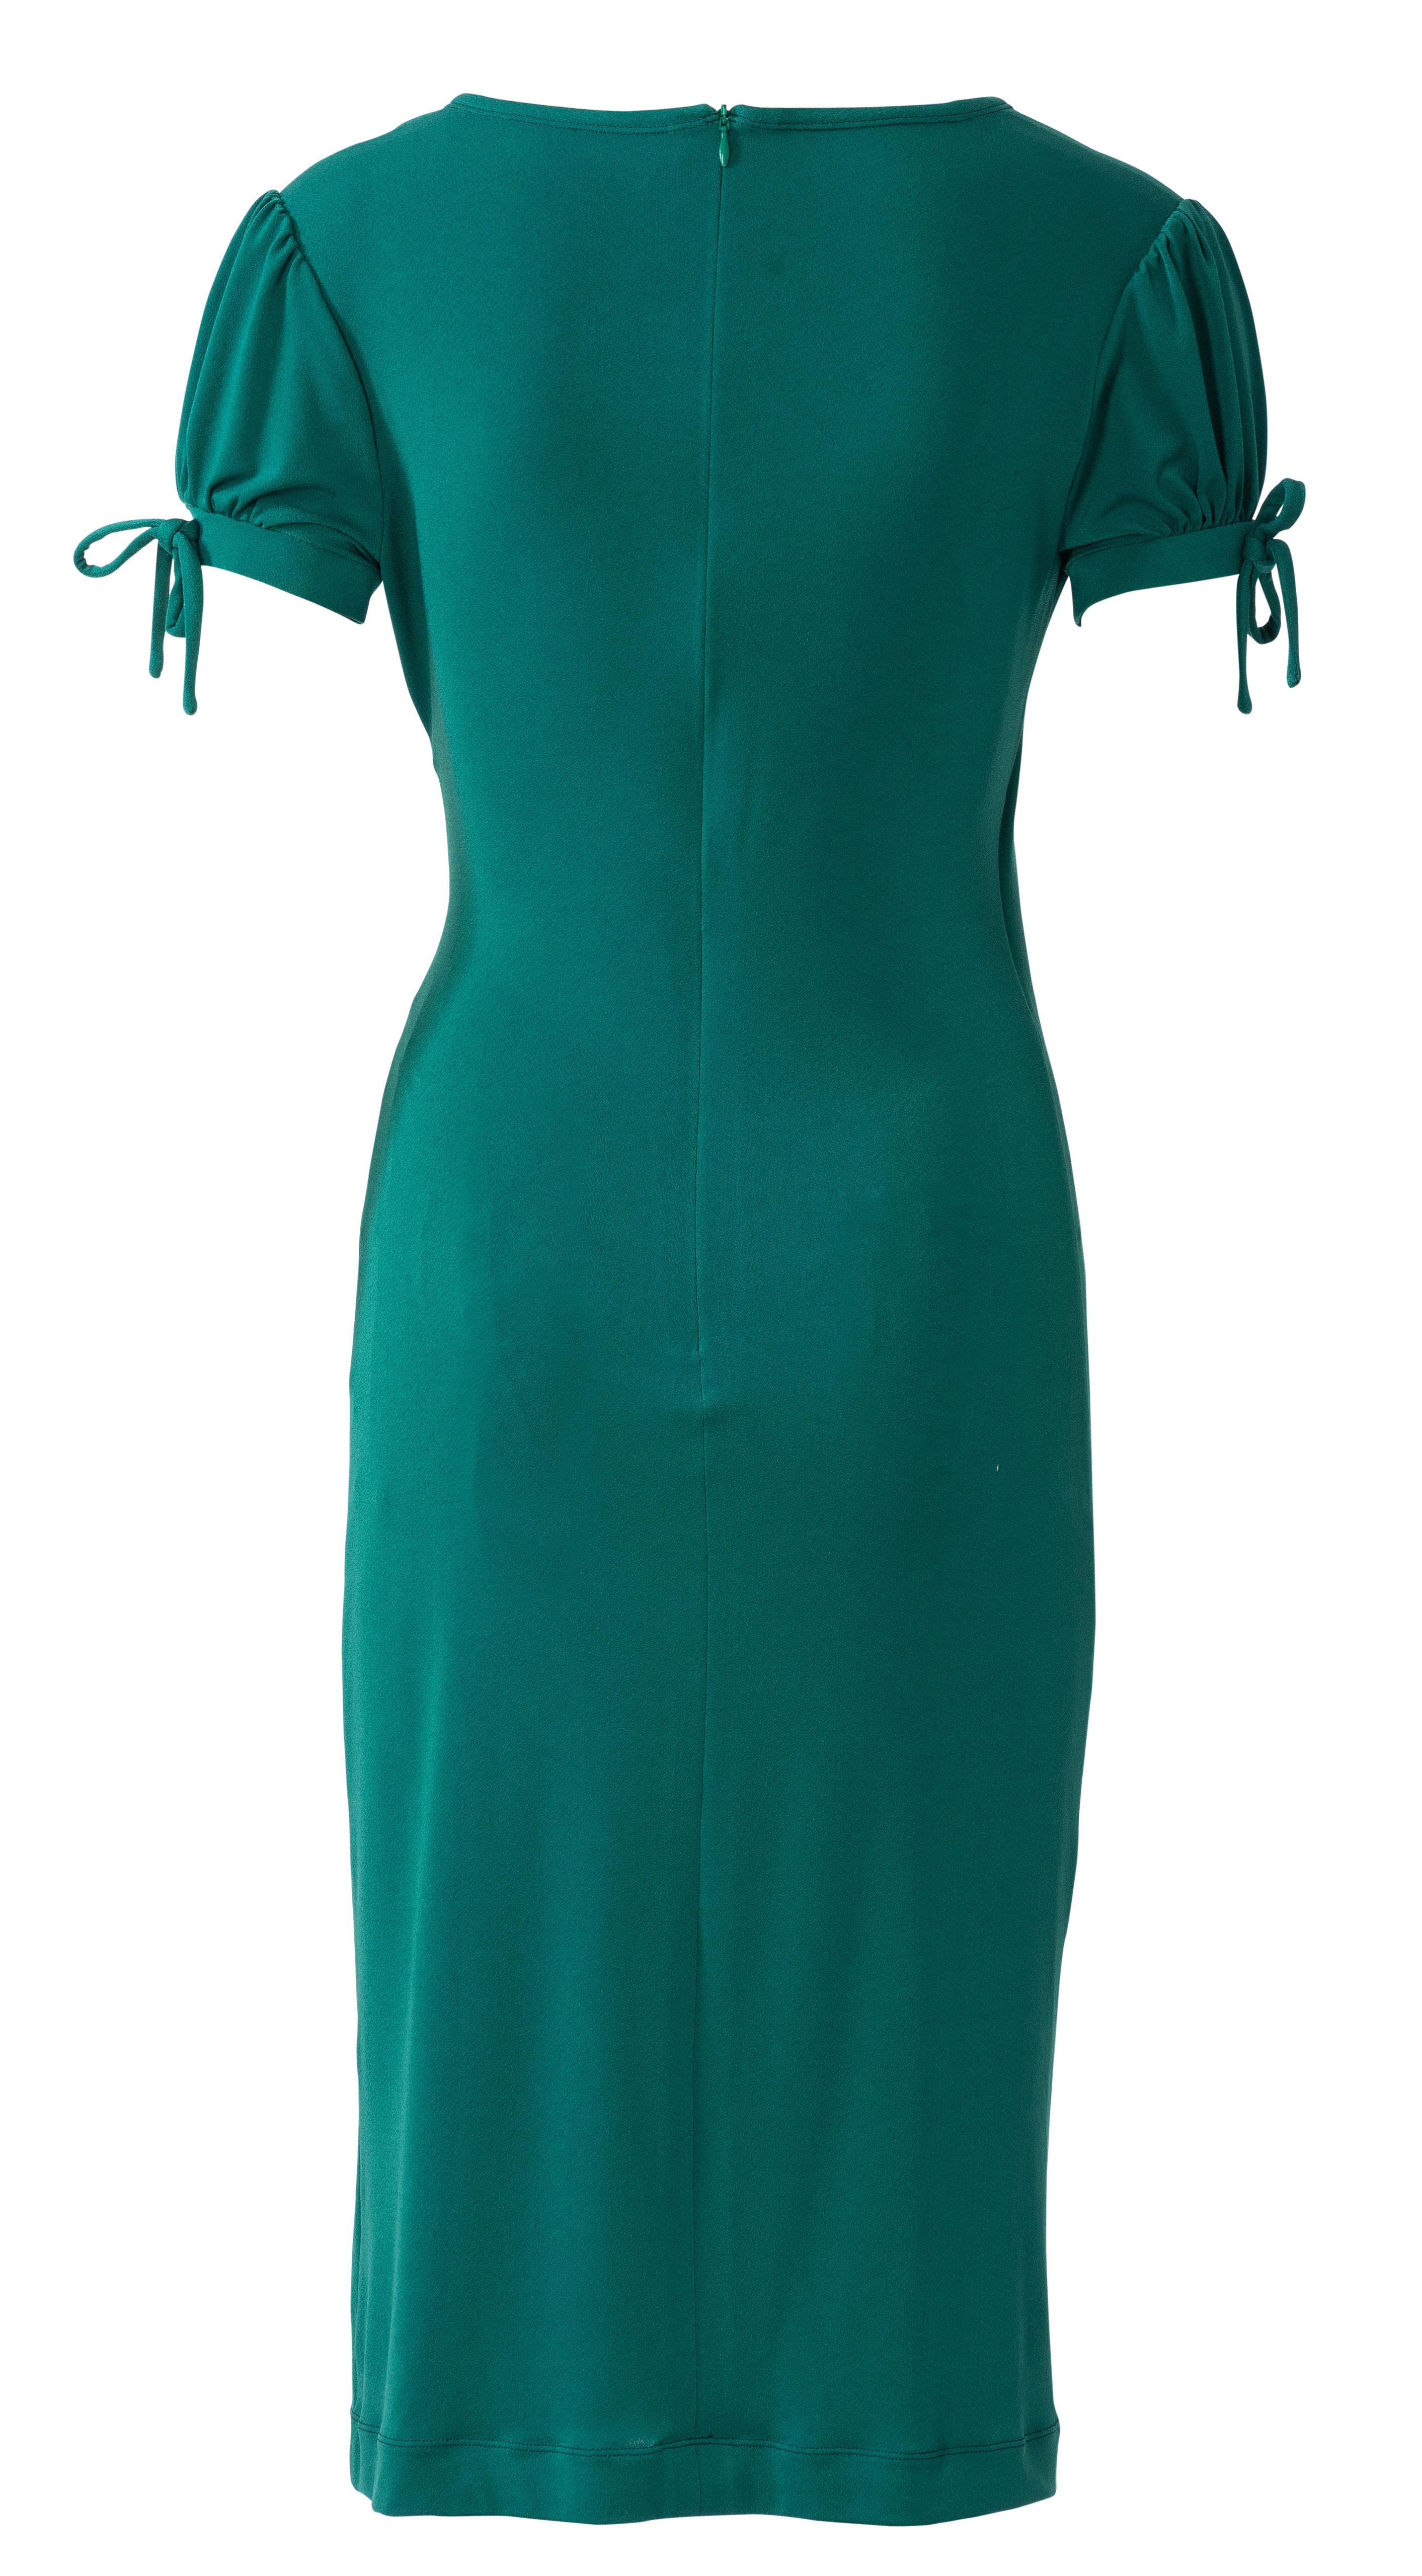 Burda B6211 Dress in Wrap Look Sewing Pattern